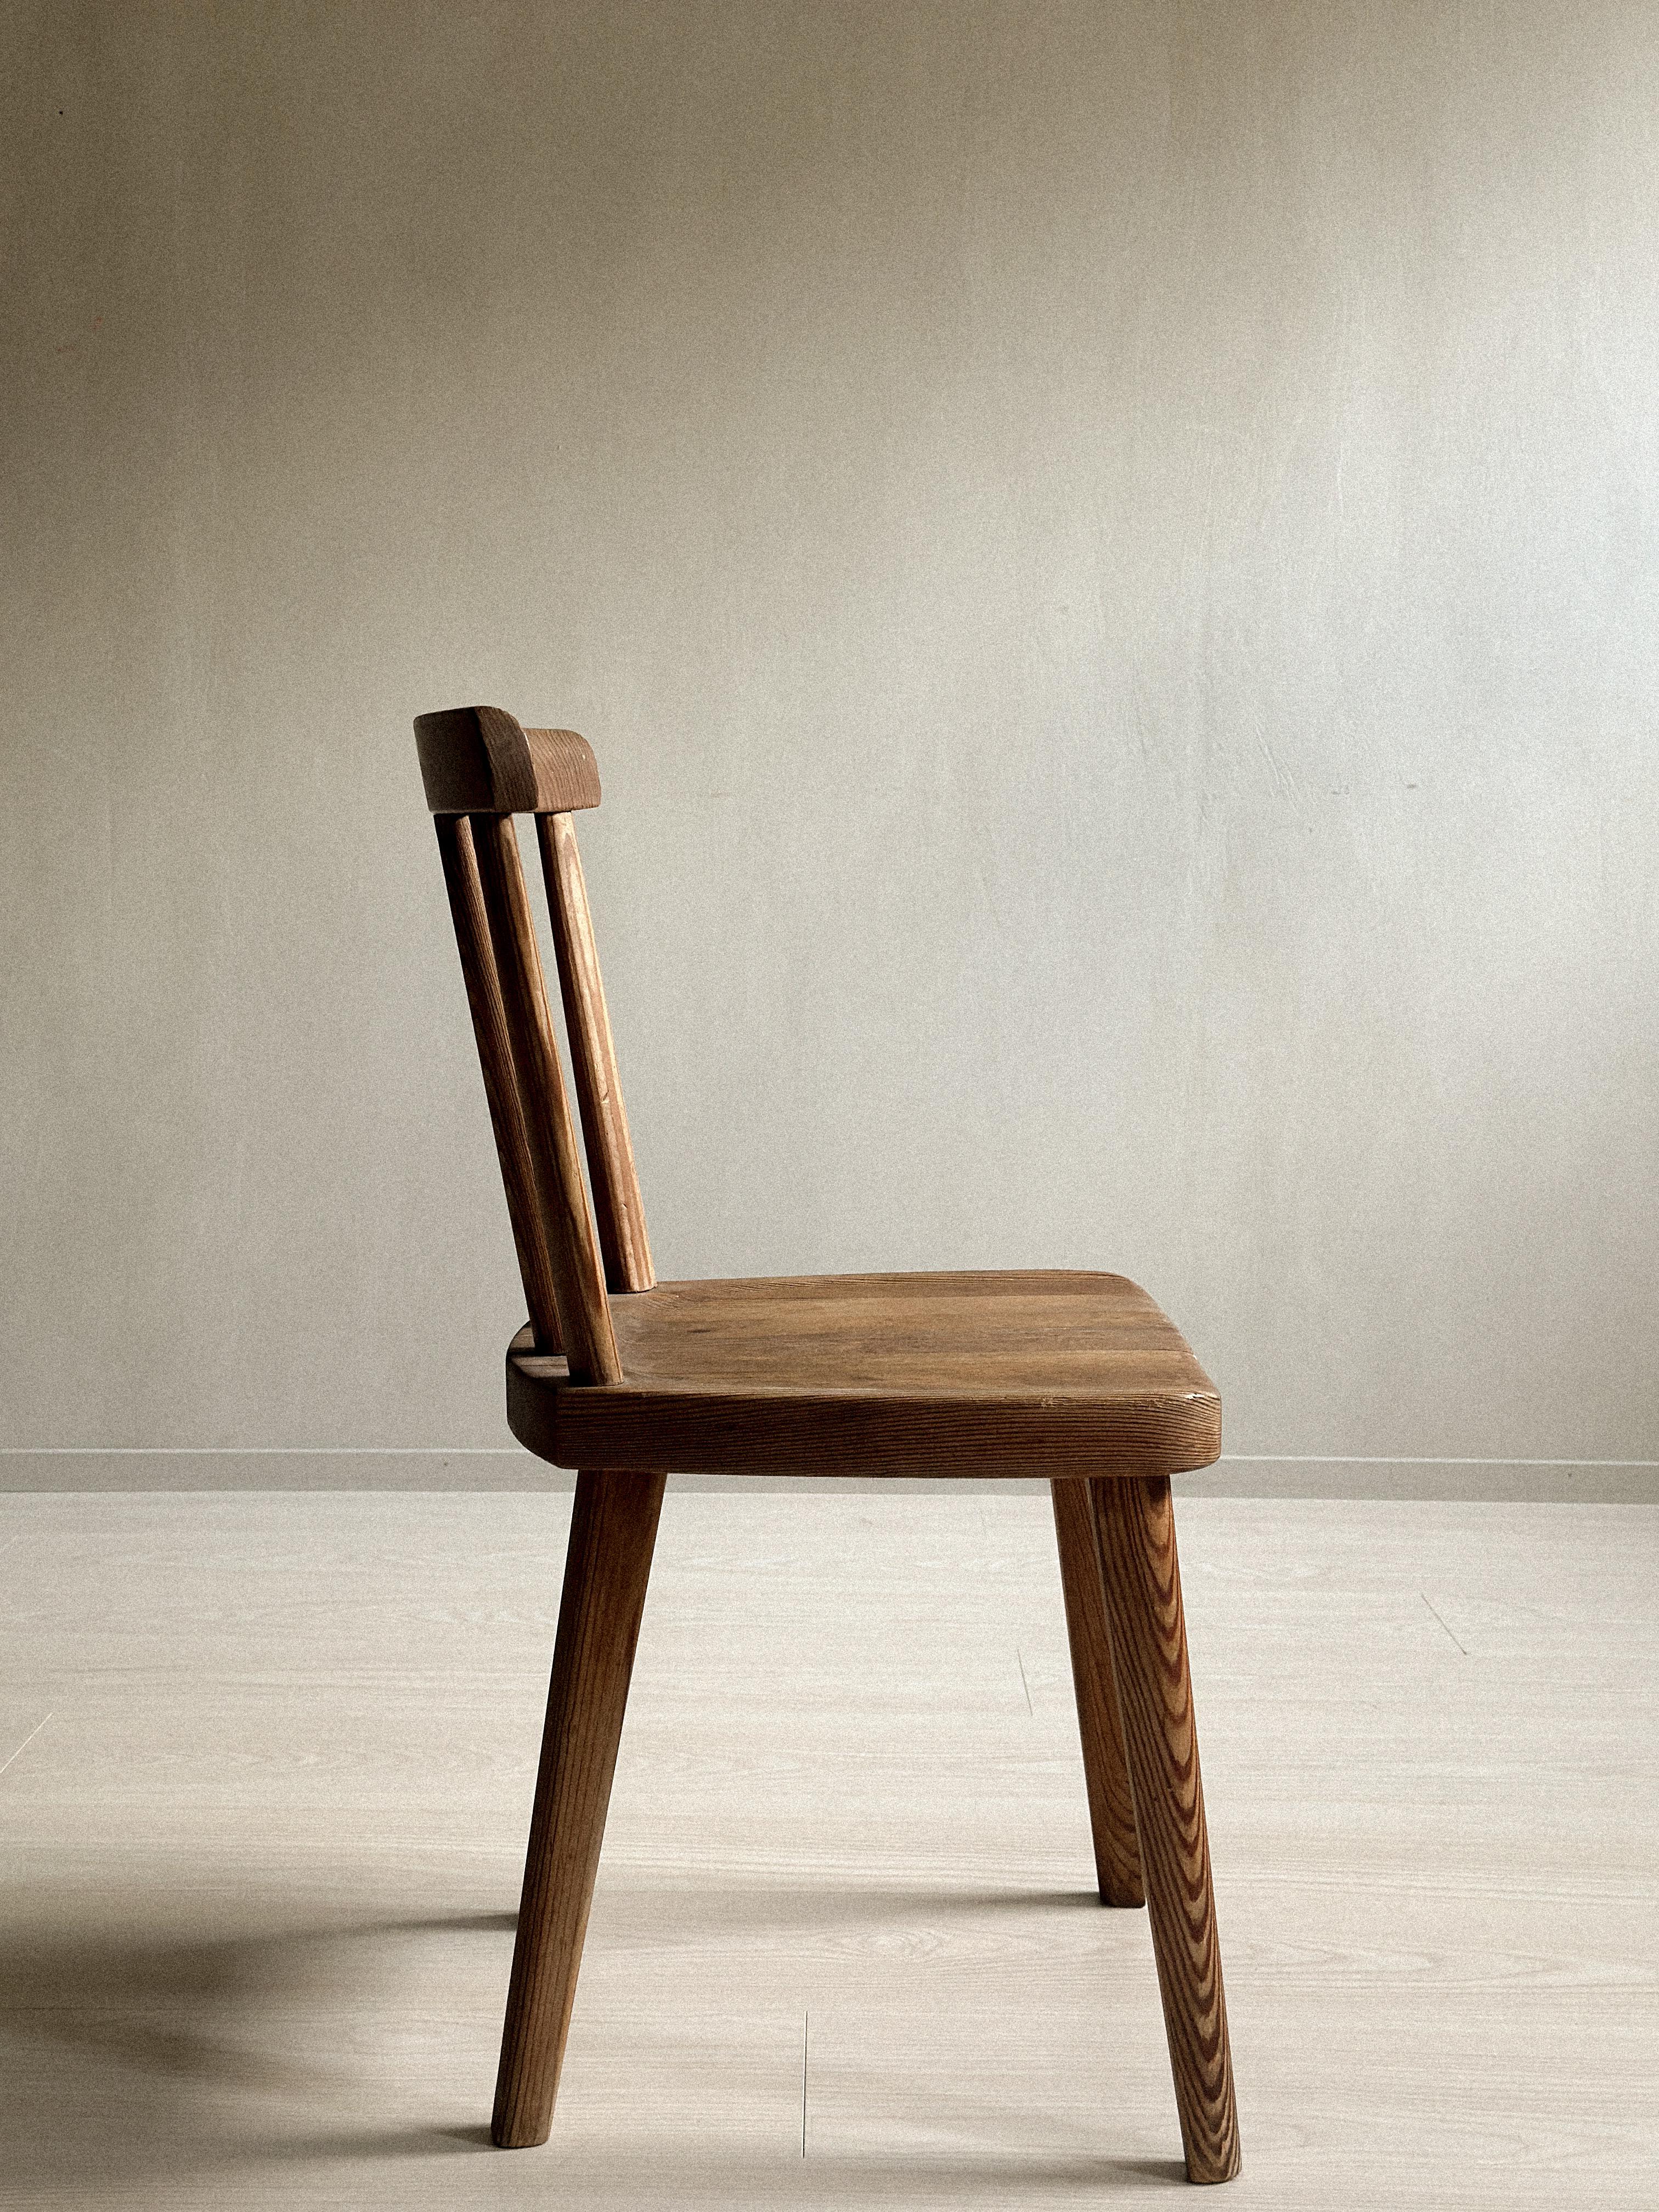 A single Utö Dining Chair by Axel Einar Hjorth for Nordiska Kompaniet, 1930s For Sale 7